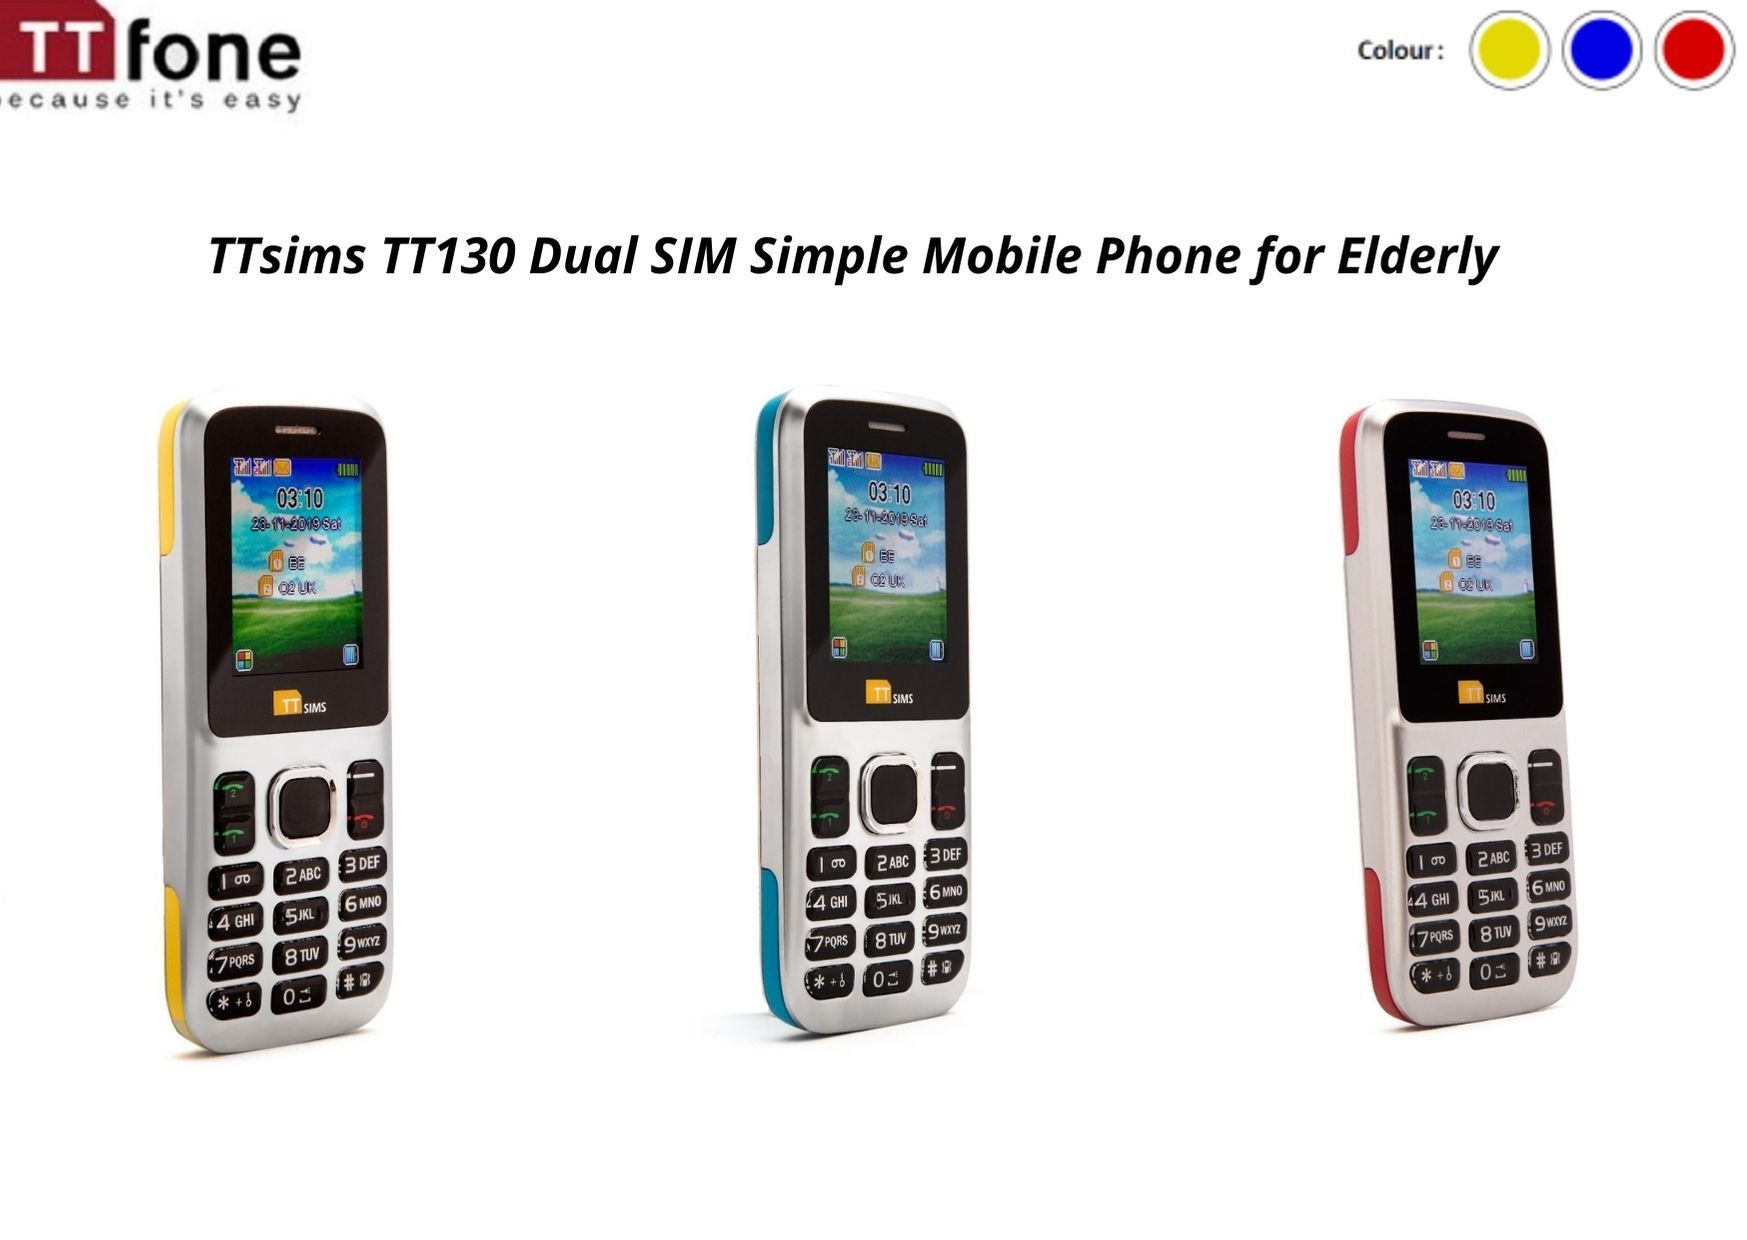 TTsims TT130 Dual SIM Big Button Mobile Phone for Elderly